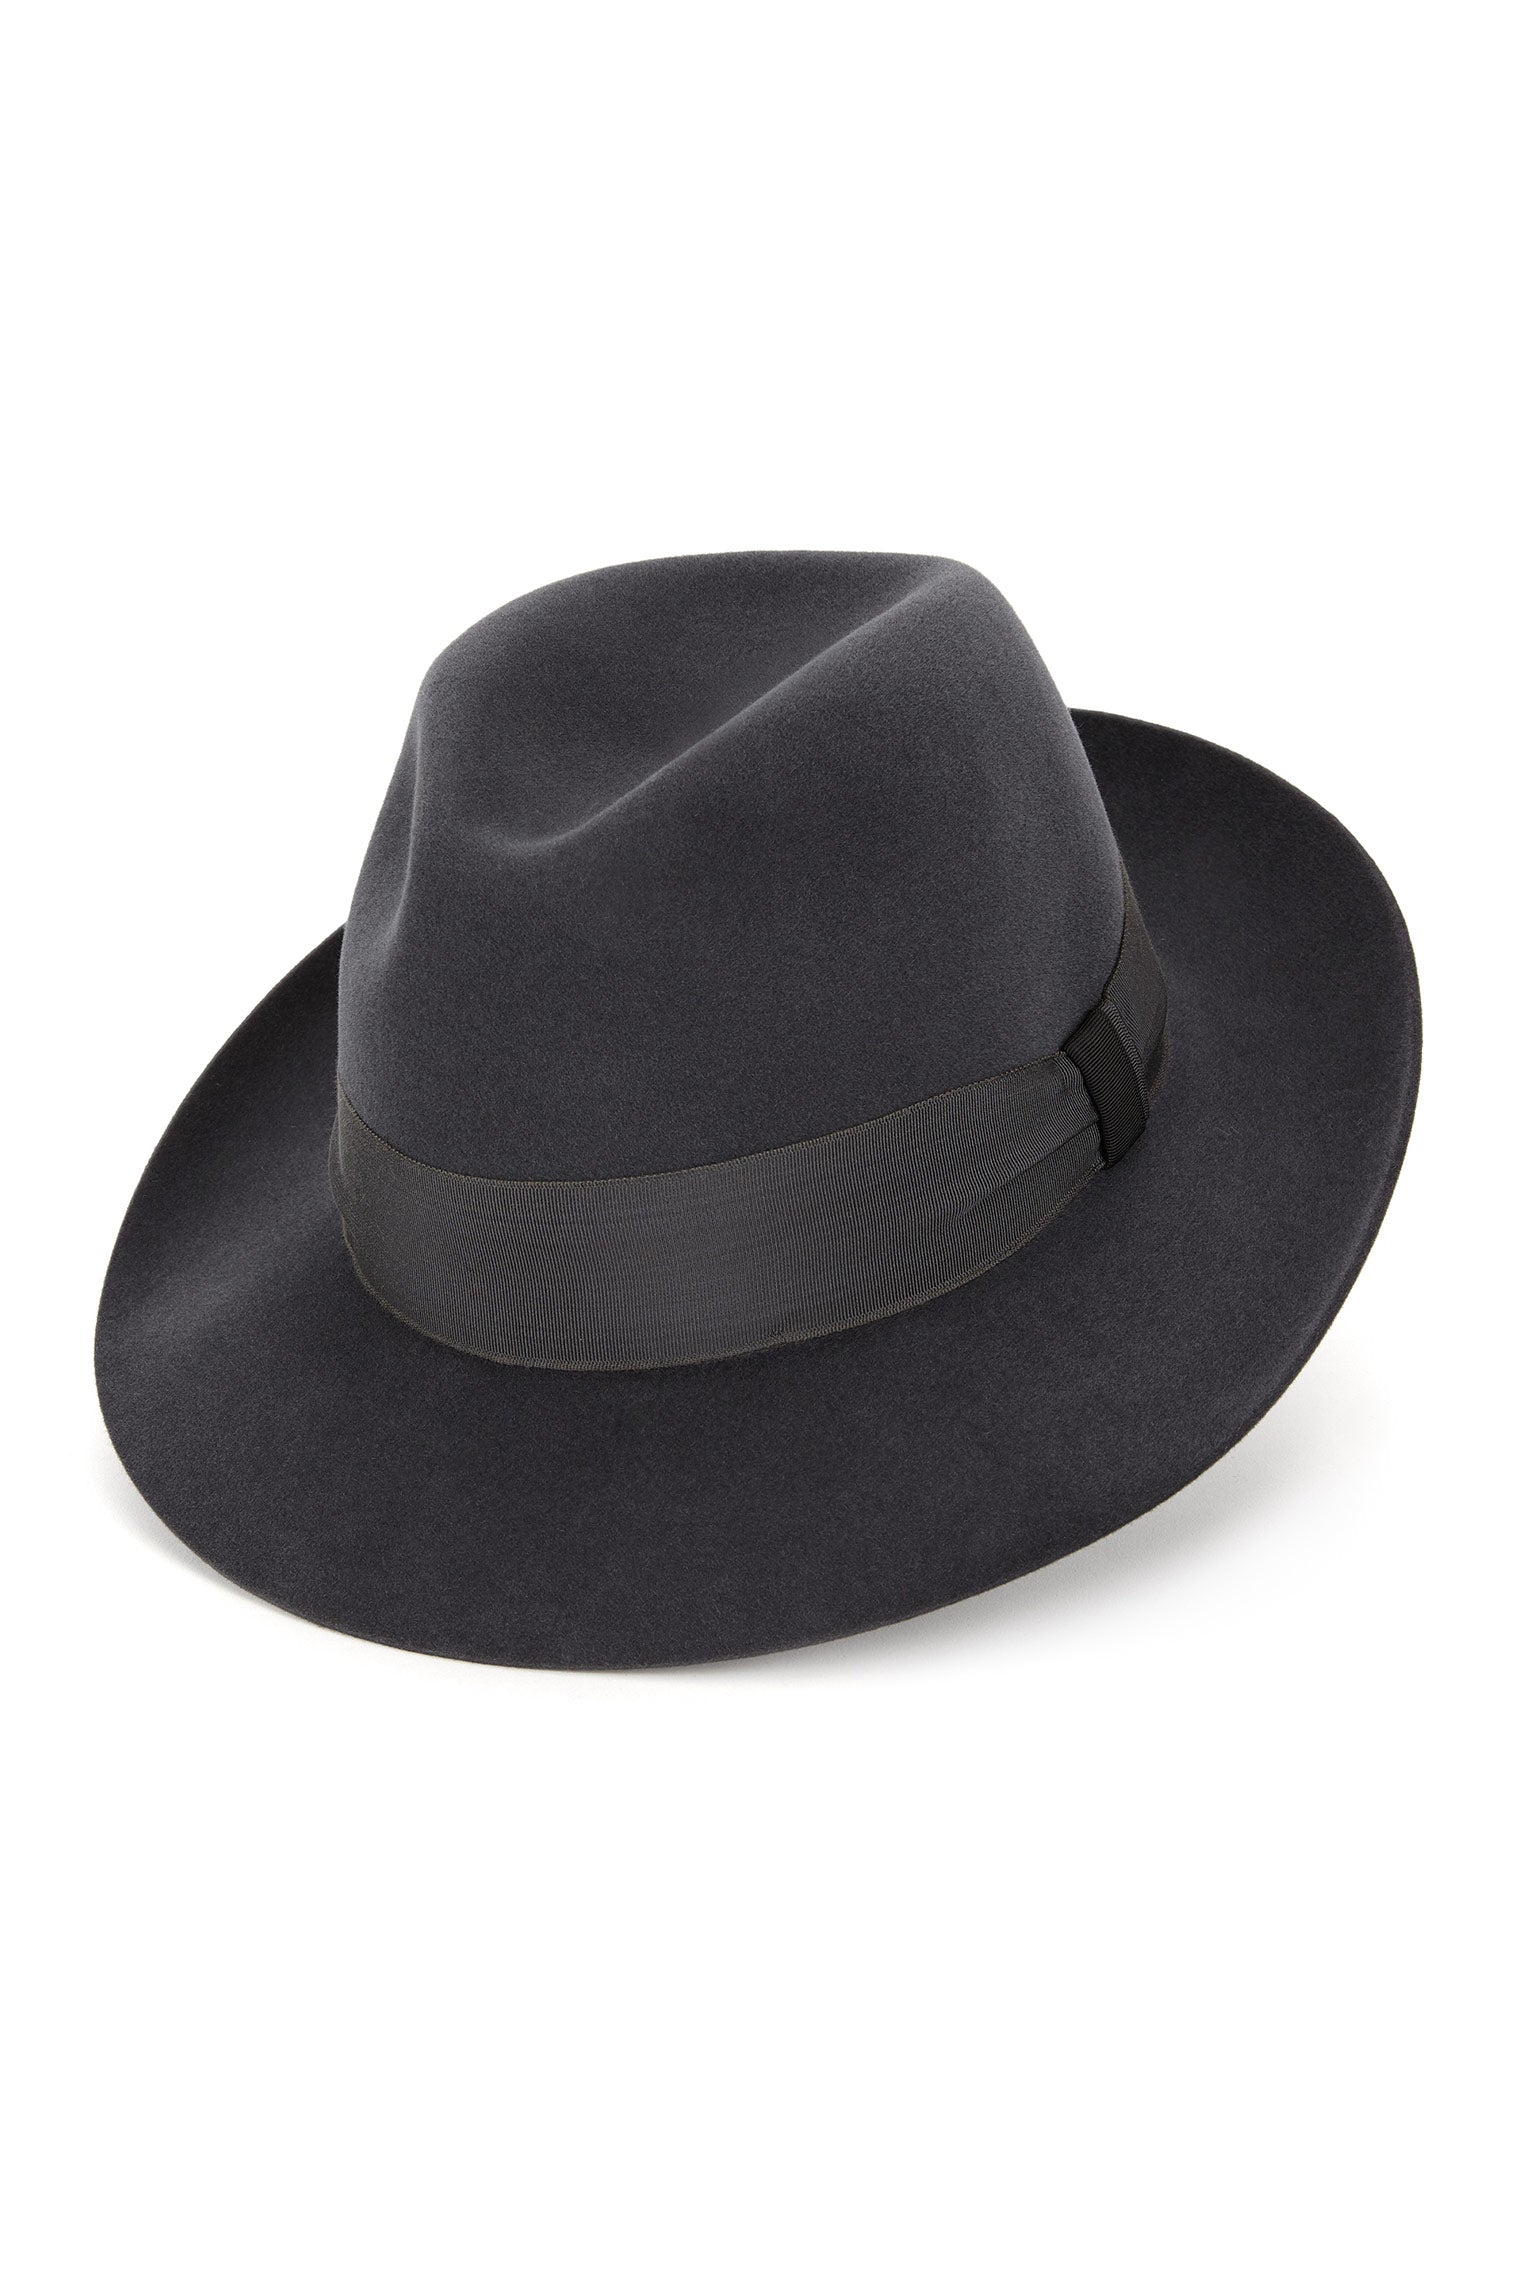 Prague Fedora - Hats for Long Face Shapes - Lock & Co. Hatters London UK